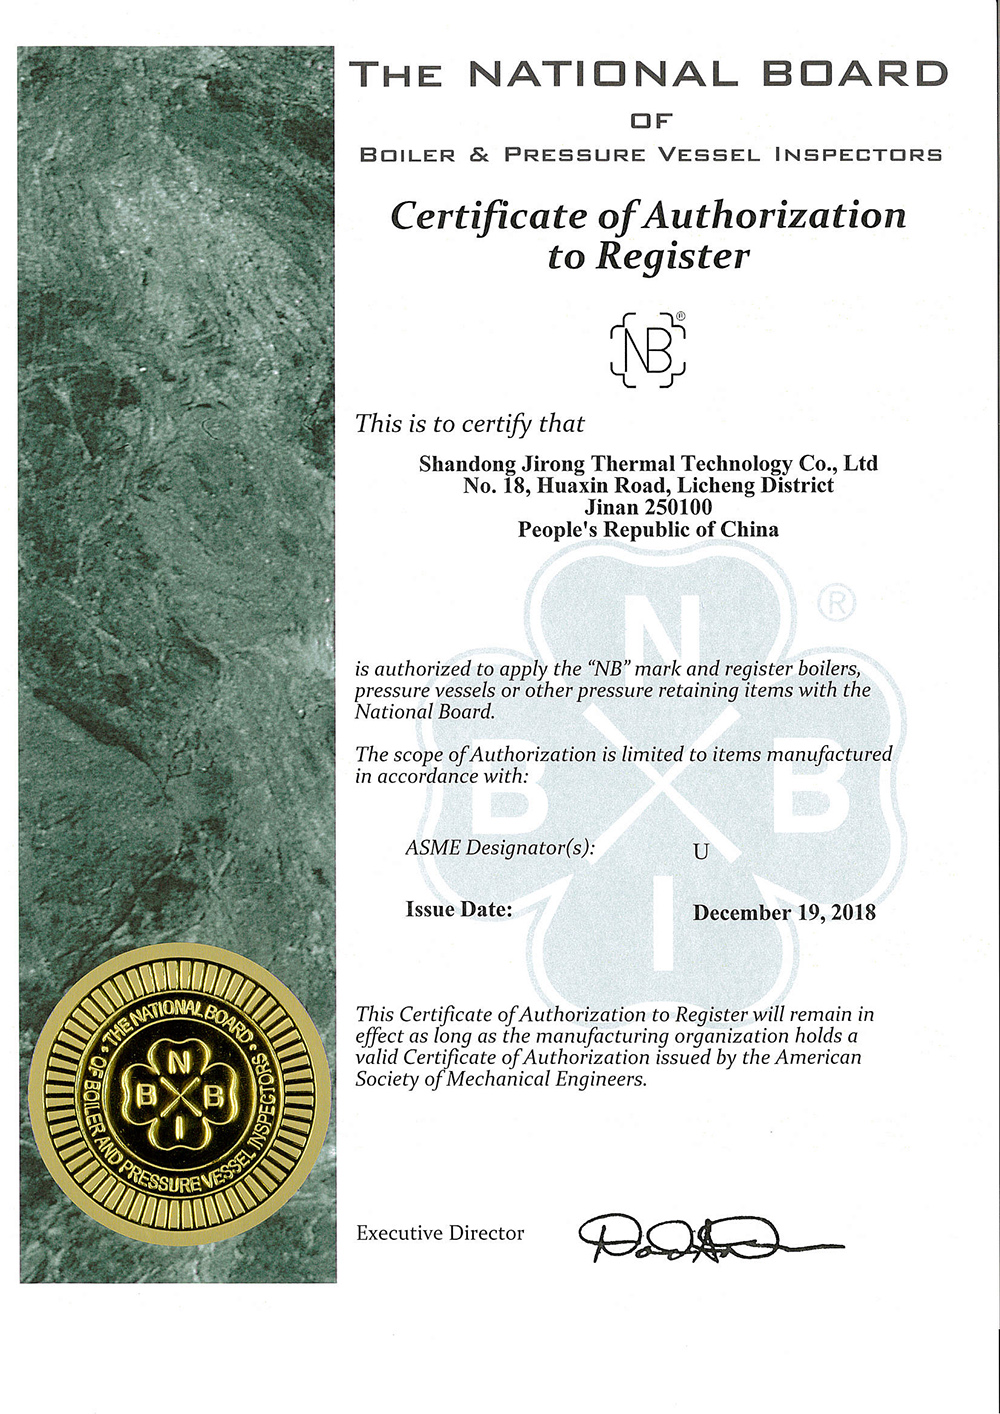 Jirong Thermal Engineering NB Registration Certificate